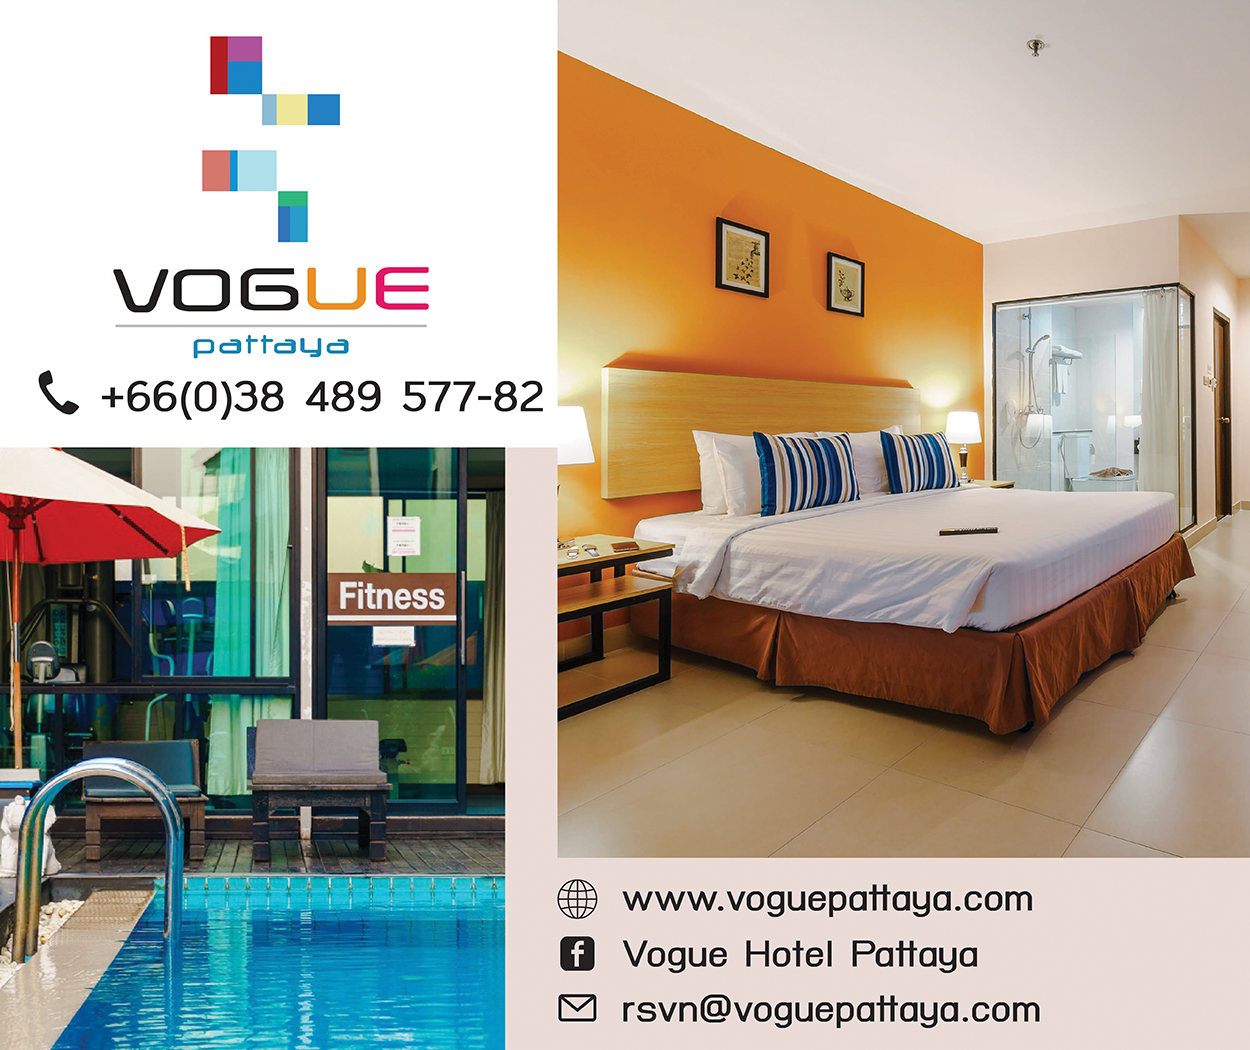 The Vogue Pattaya Hotel